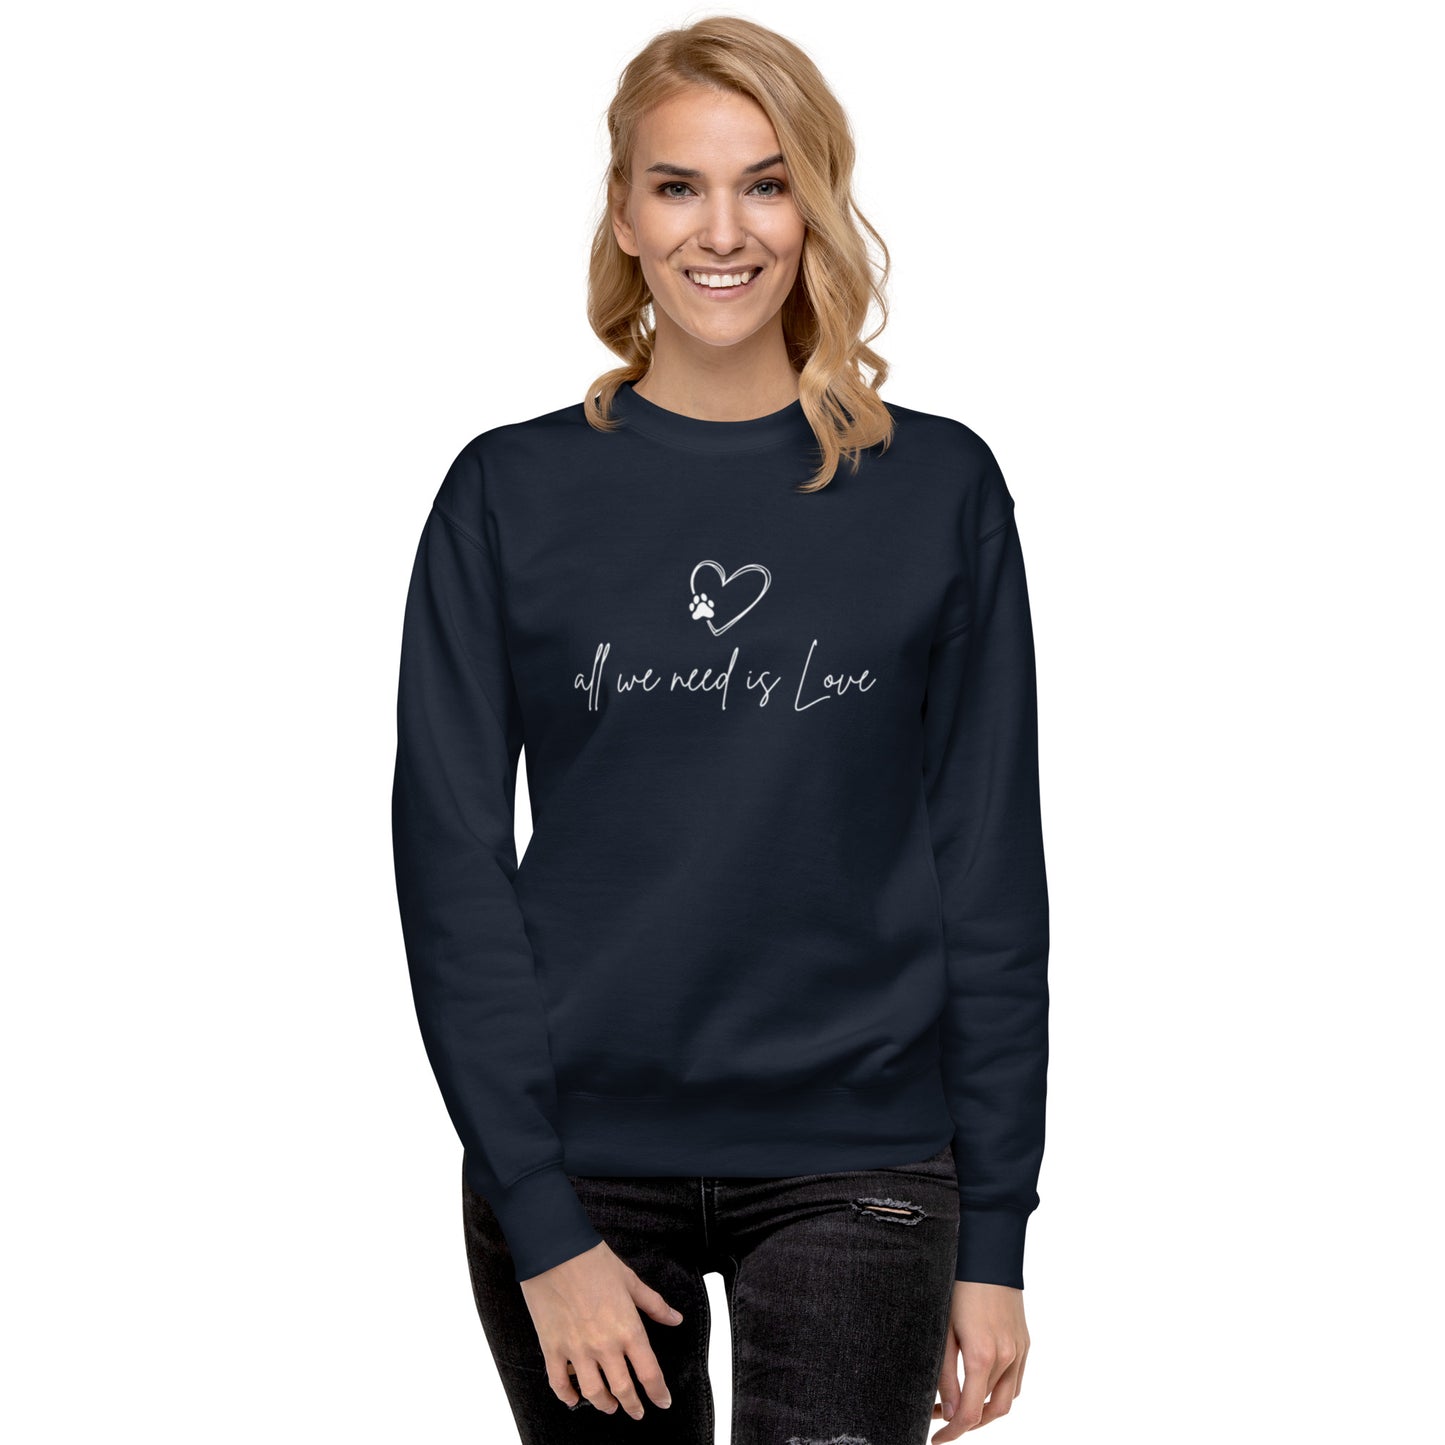 All we Need is Love - Sweatshirt